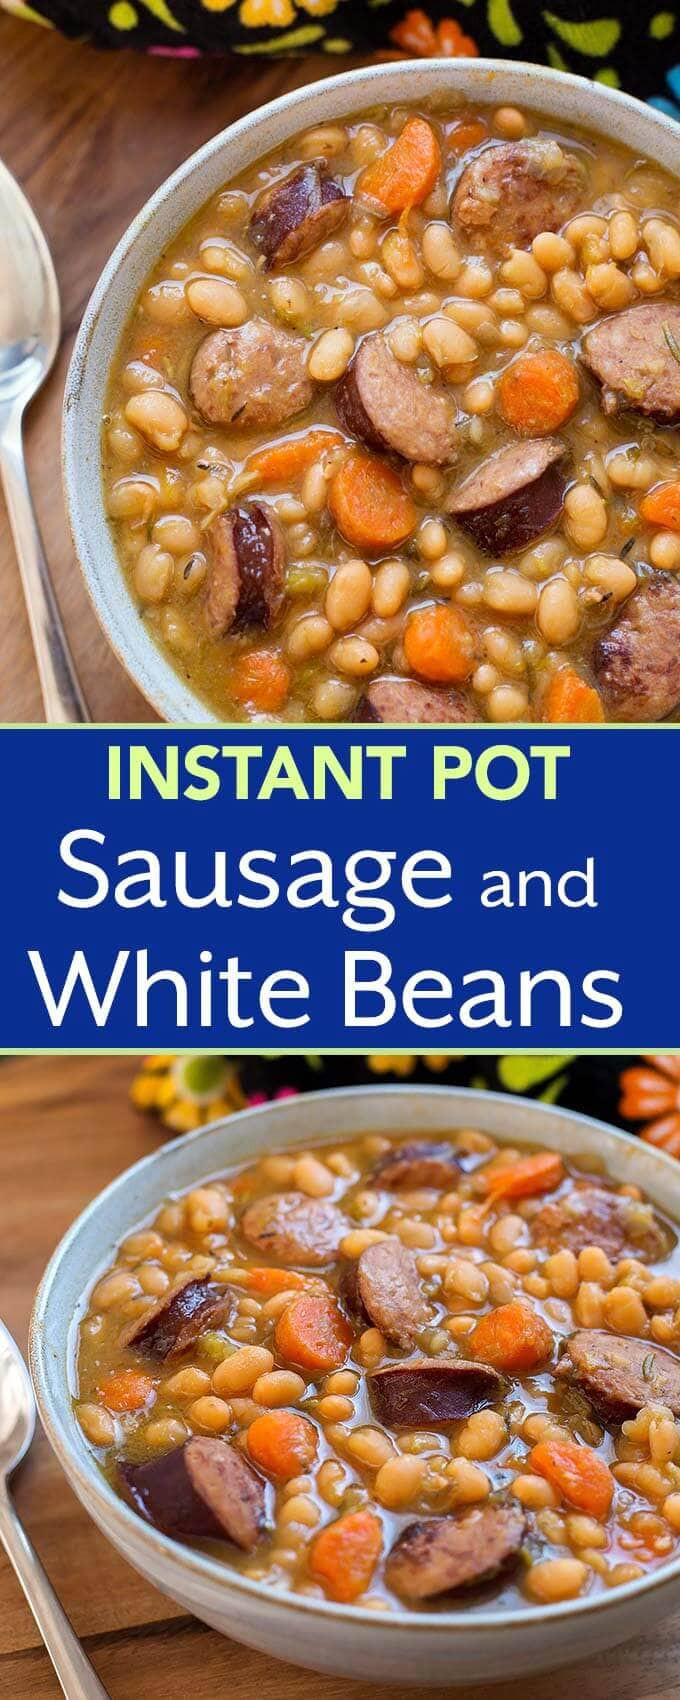 Instant Pot Sausage Recipes
 Instant Pot Sausage and White Beans